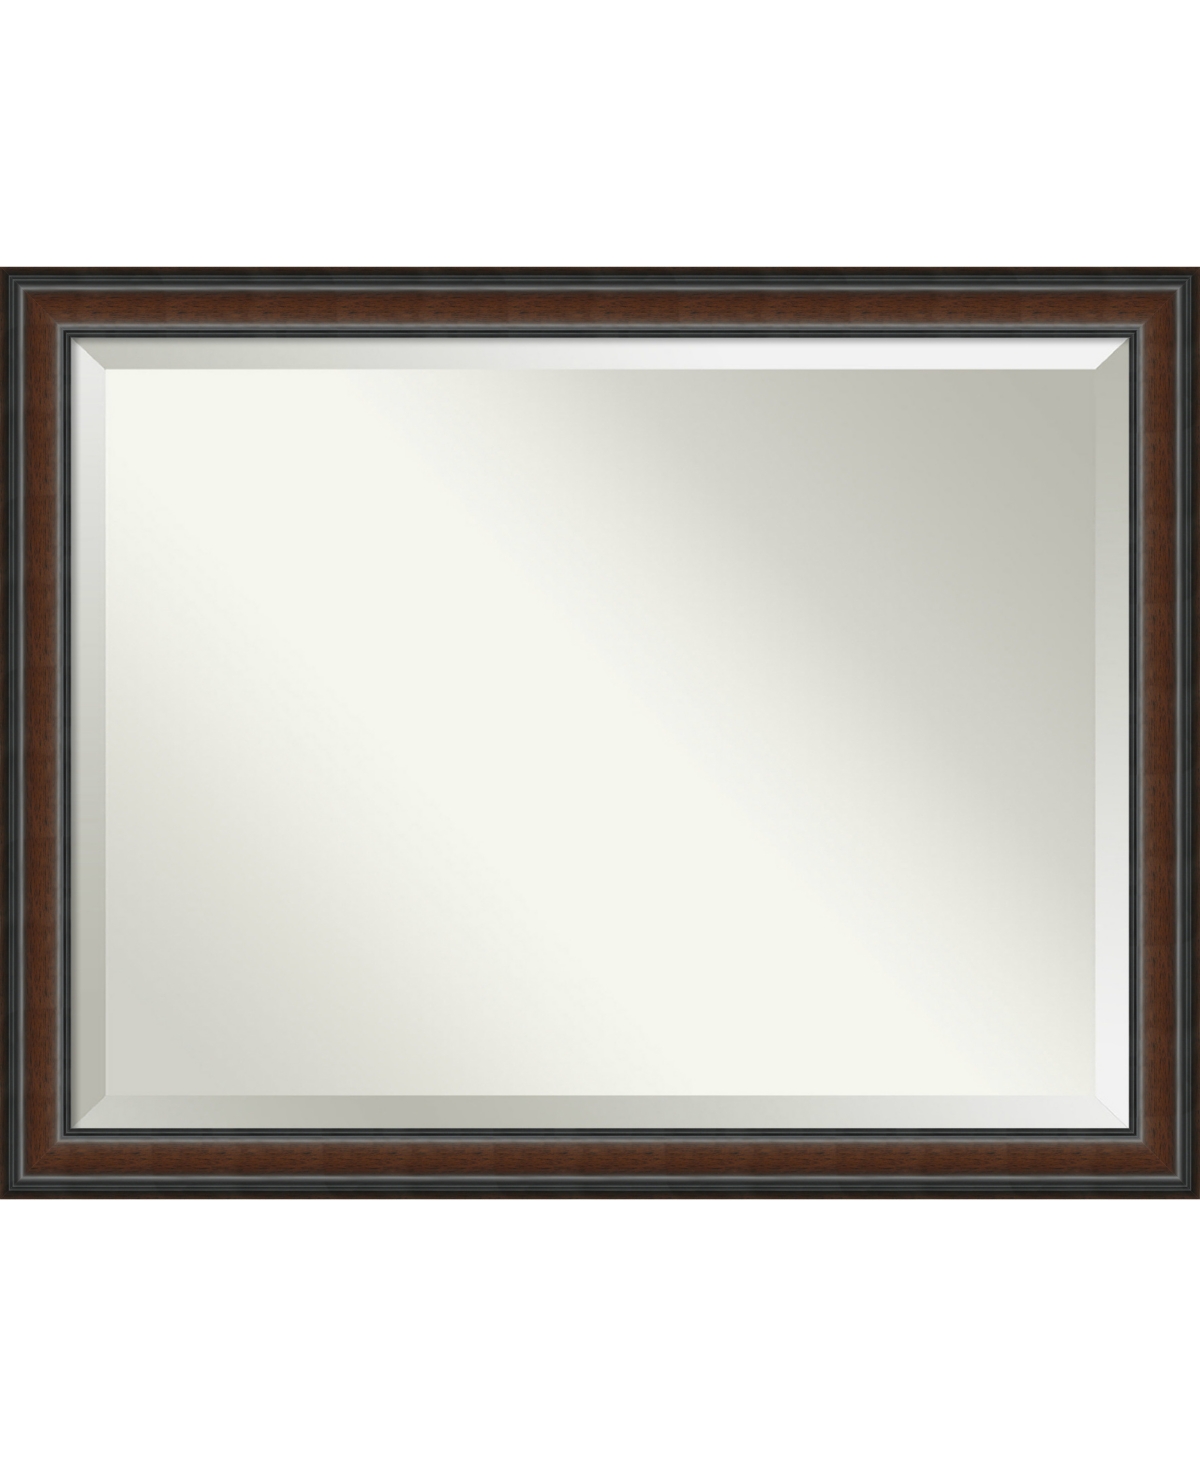 Craftsman 41x29 Wall Mirror